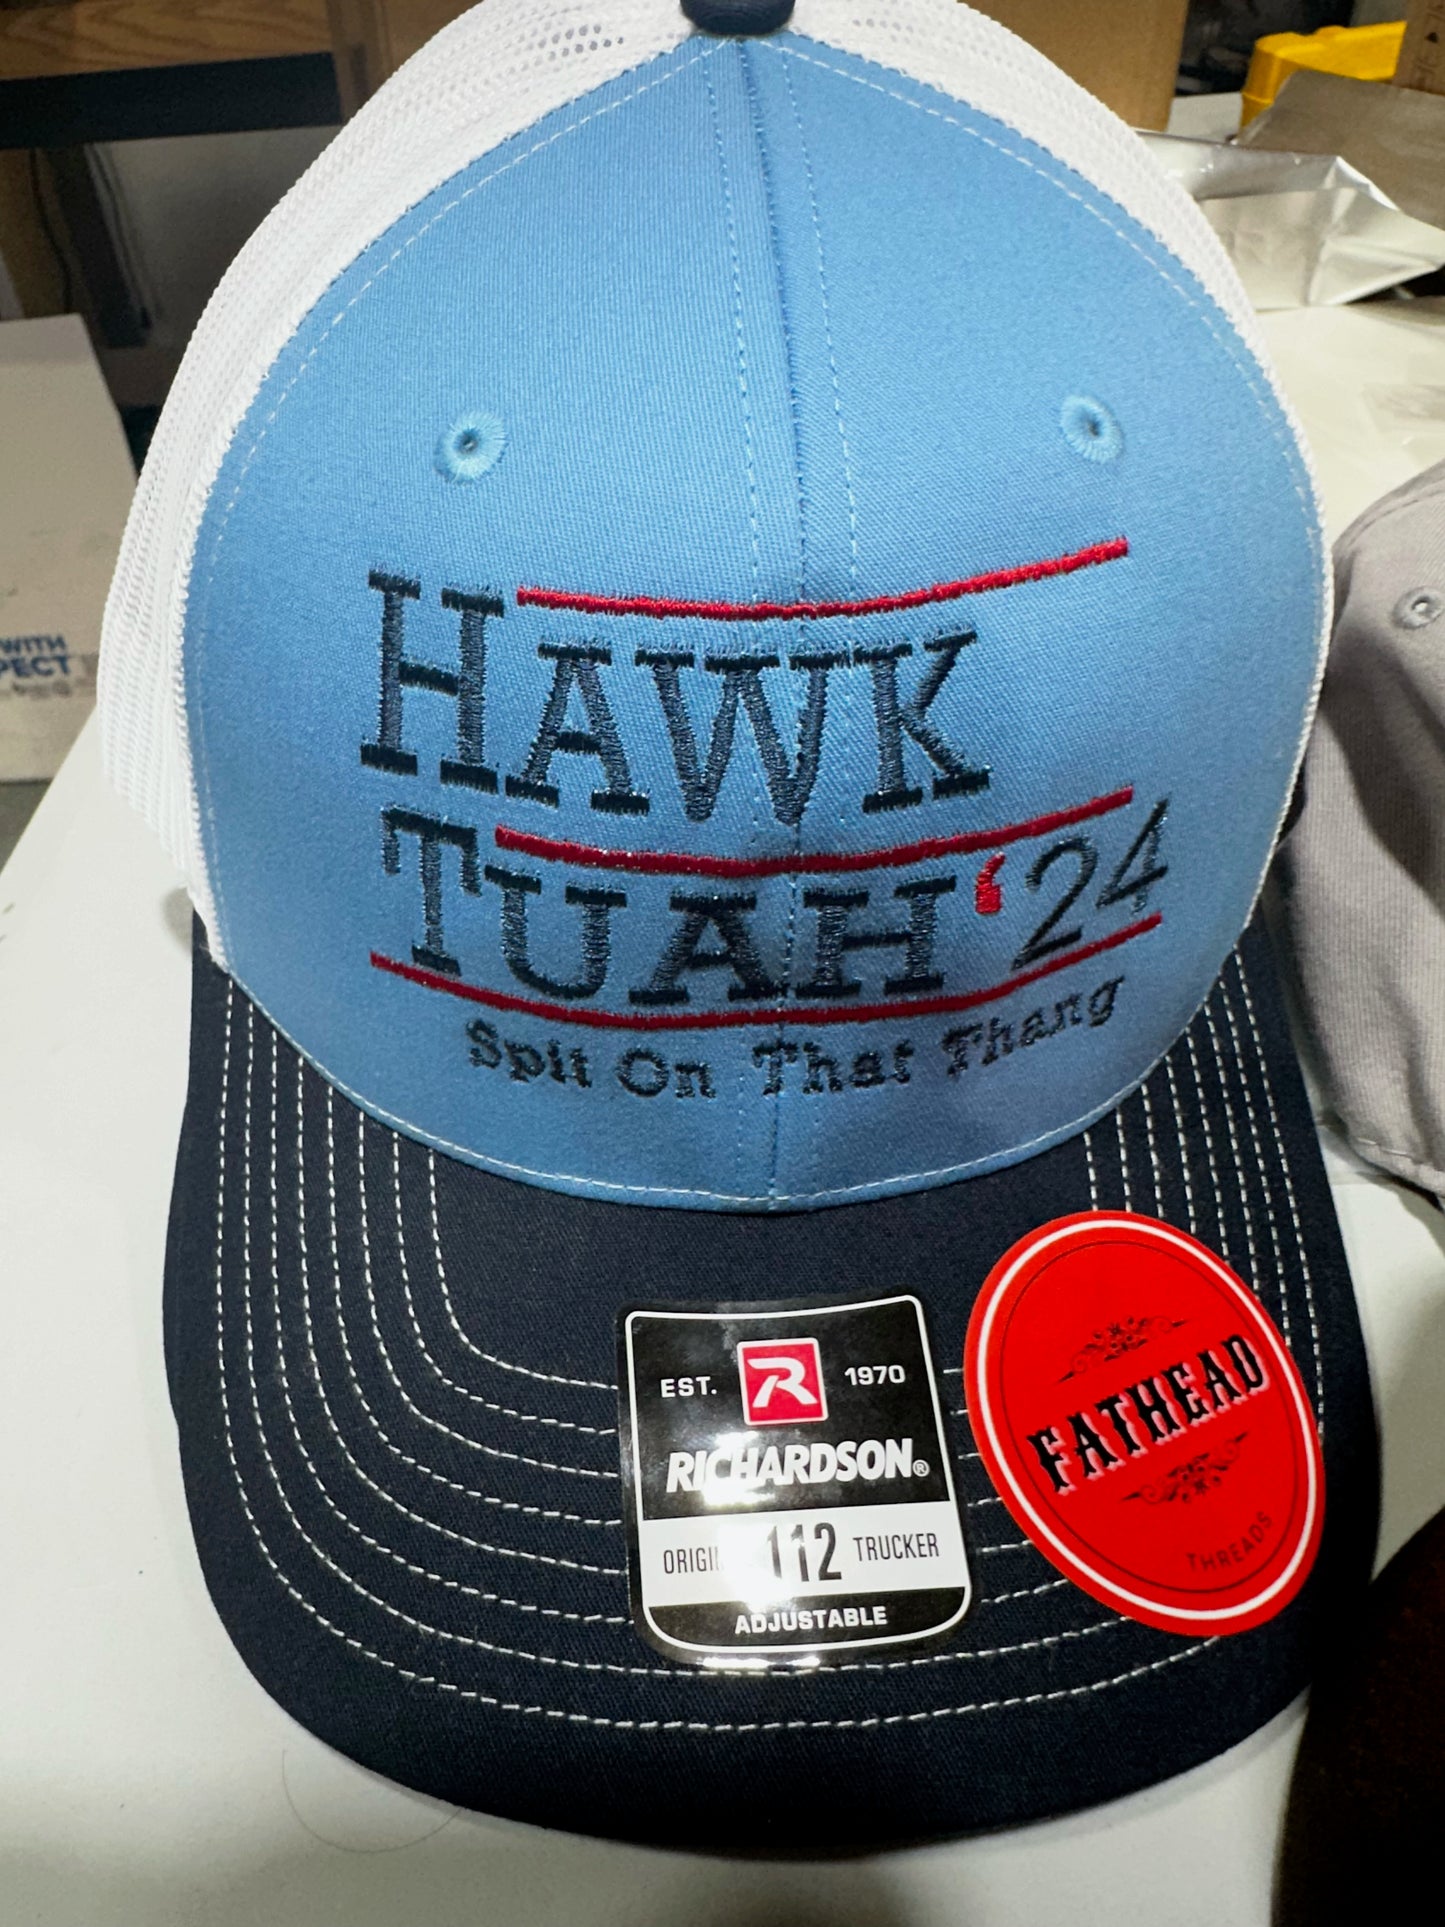 Signed "HAWK TUAH" Hats